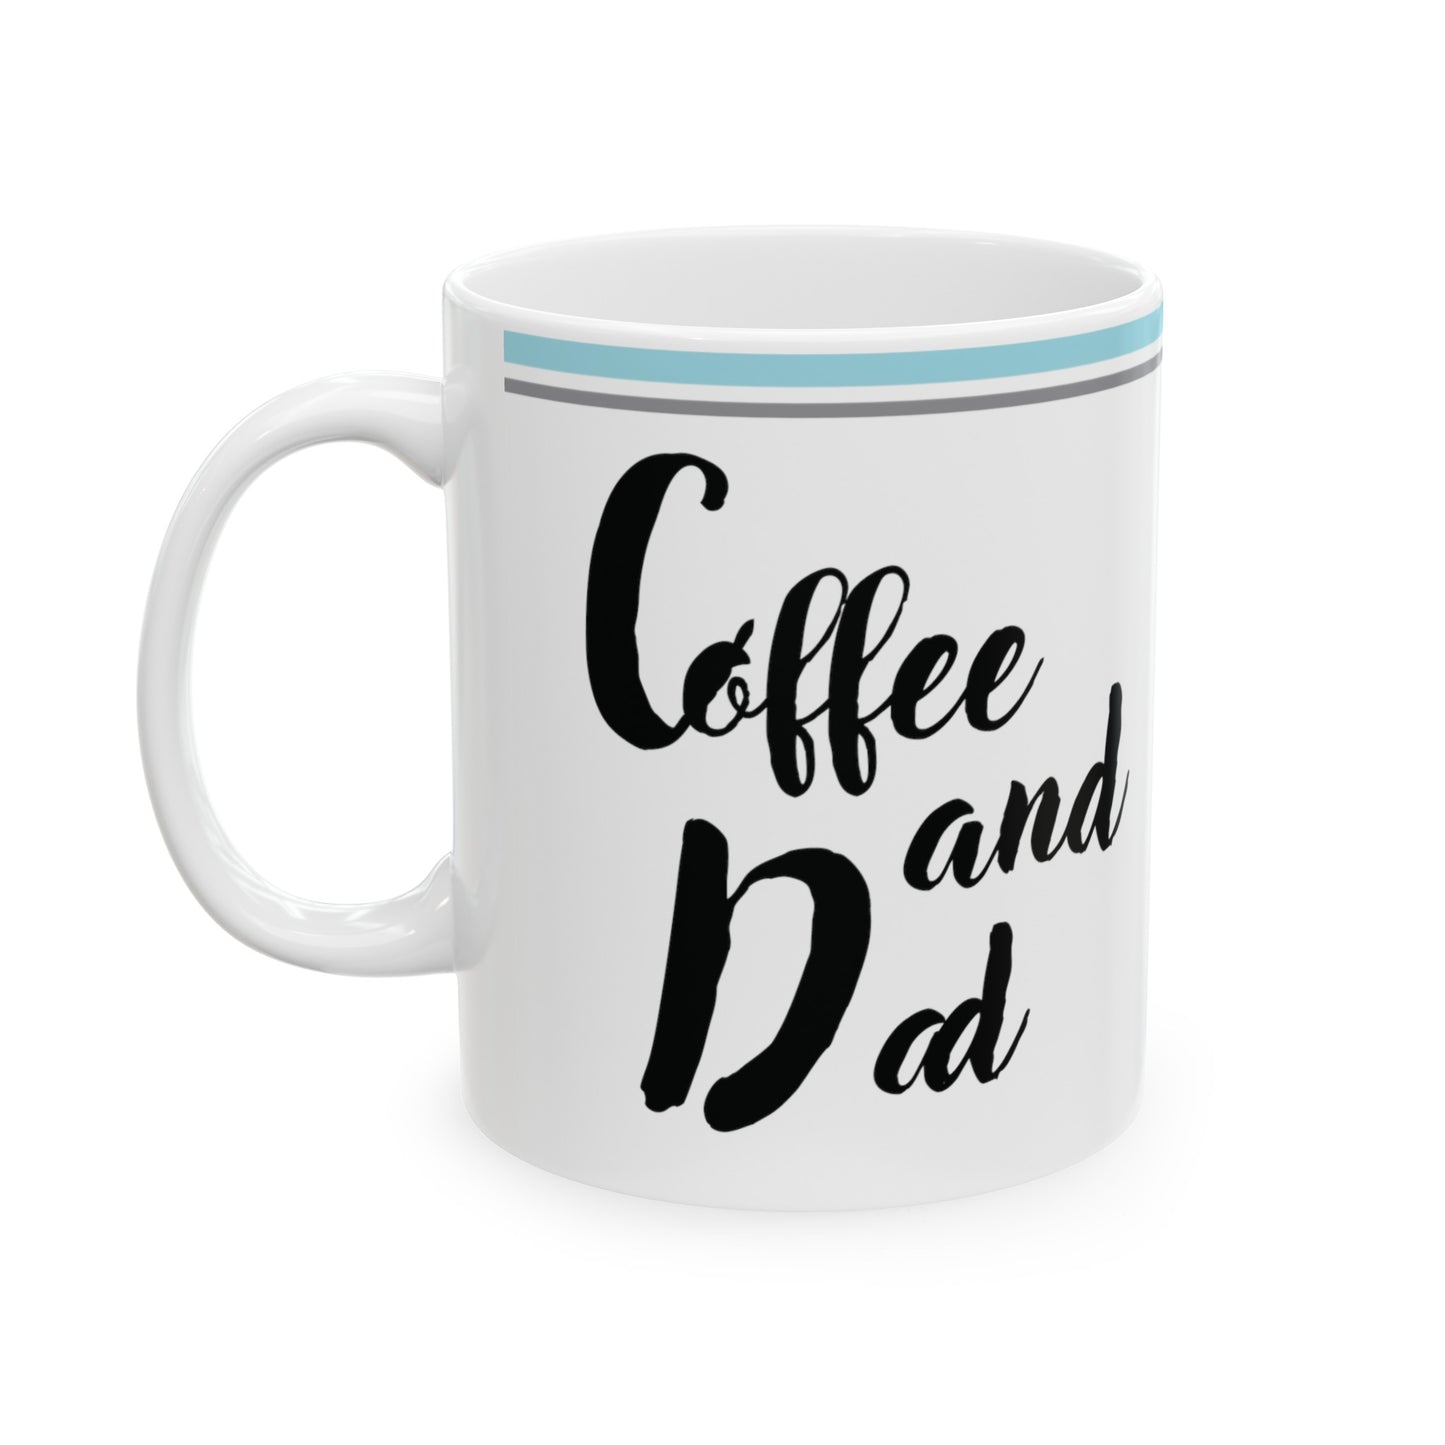 Father's Day Mug, Father Coffee Mug, Coffee and Dad Mug, Dad Tea Cup, Father's Day Gift, Gift for him, Dad Birthday Gift